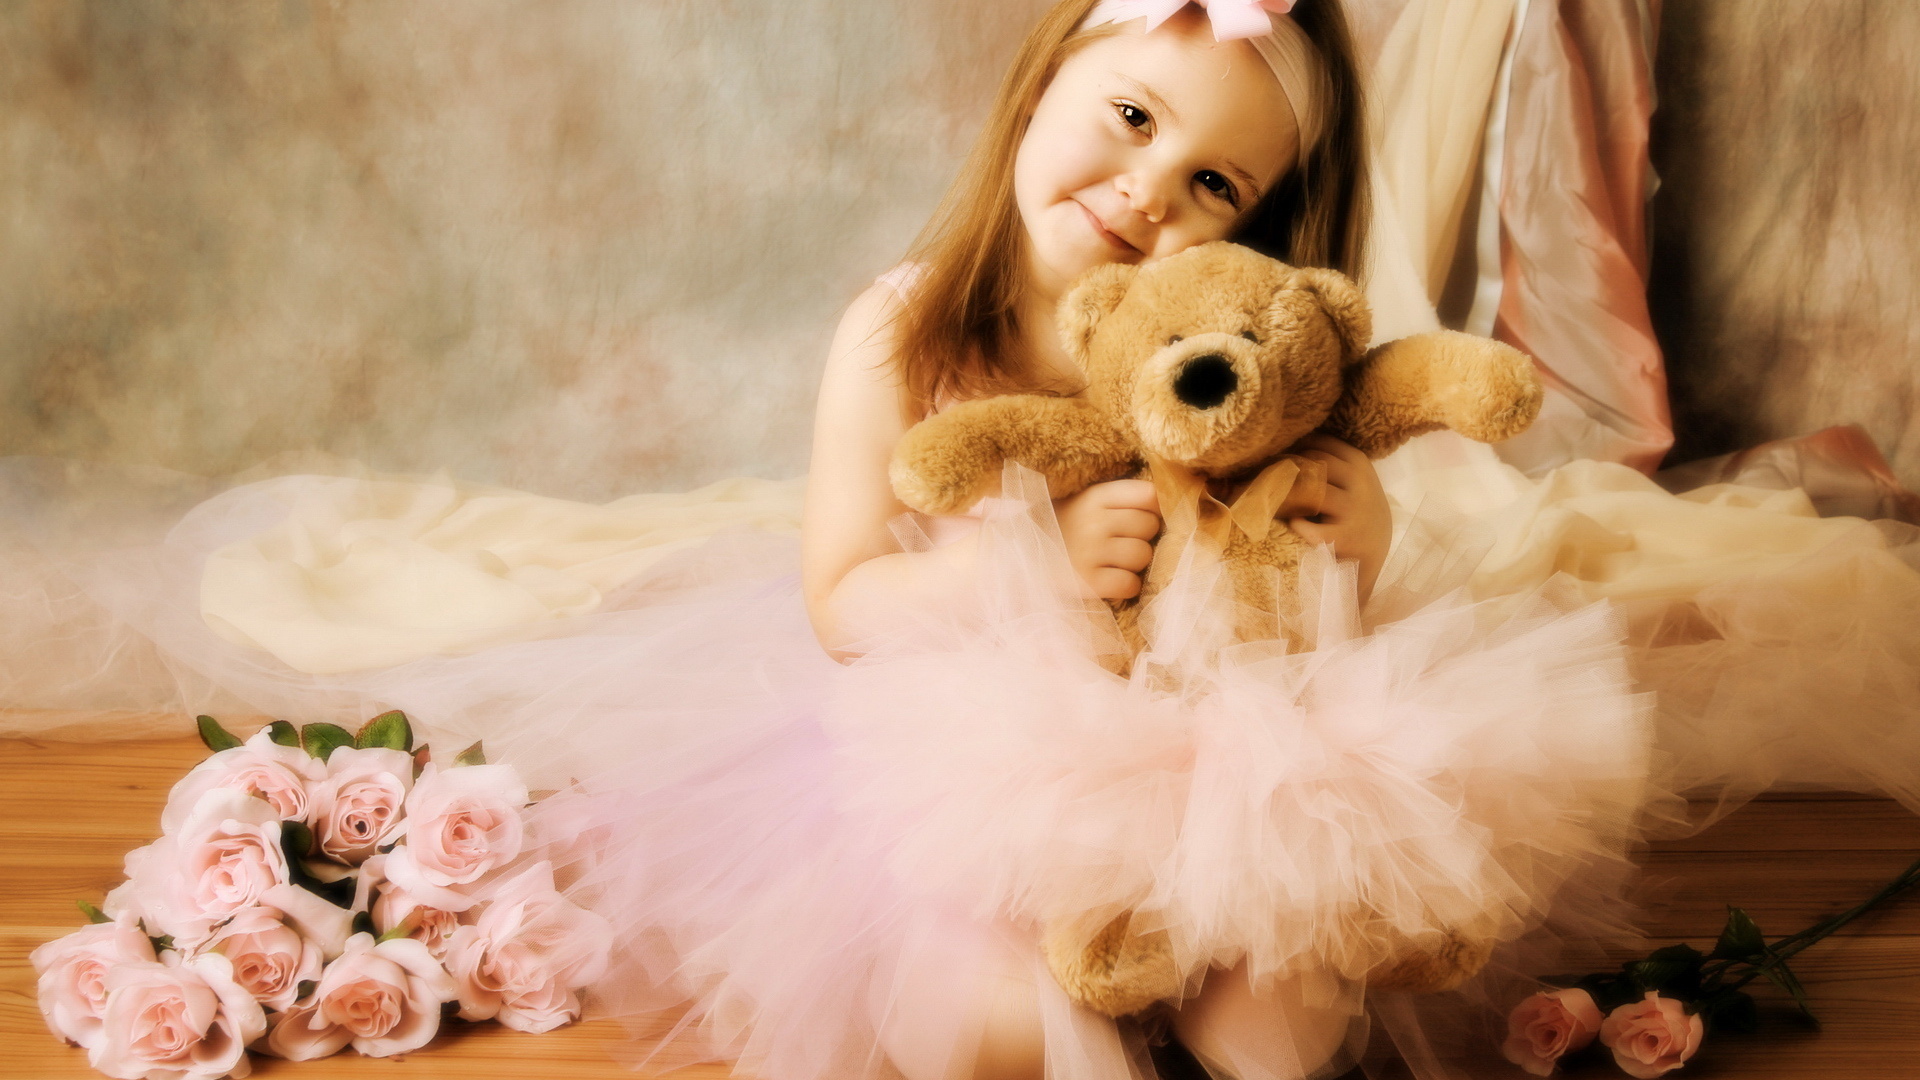 cute wallpapers hd,teddy bear,child,toy,happy,doll